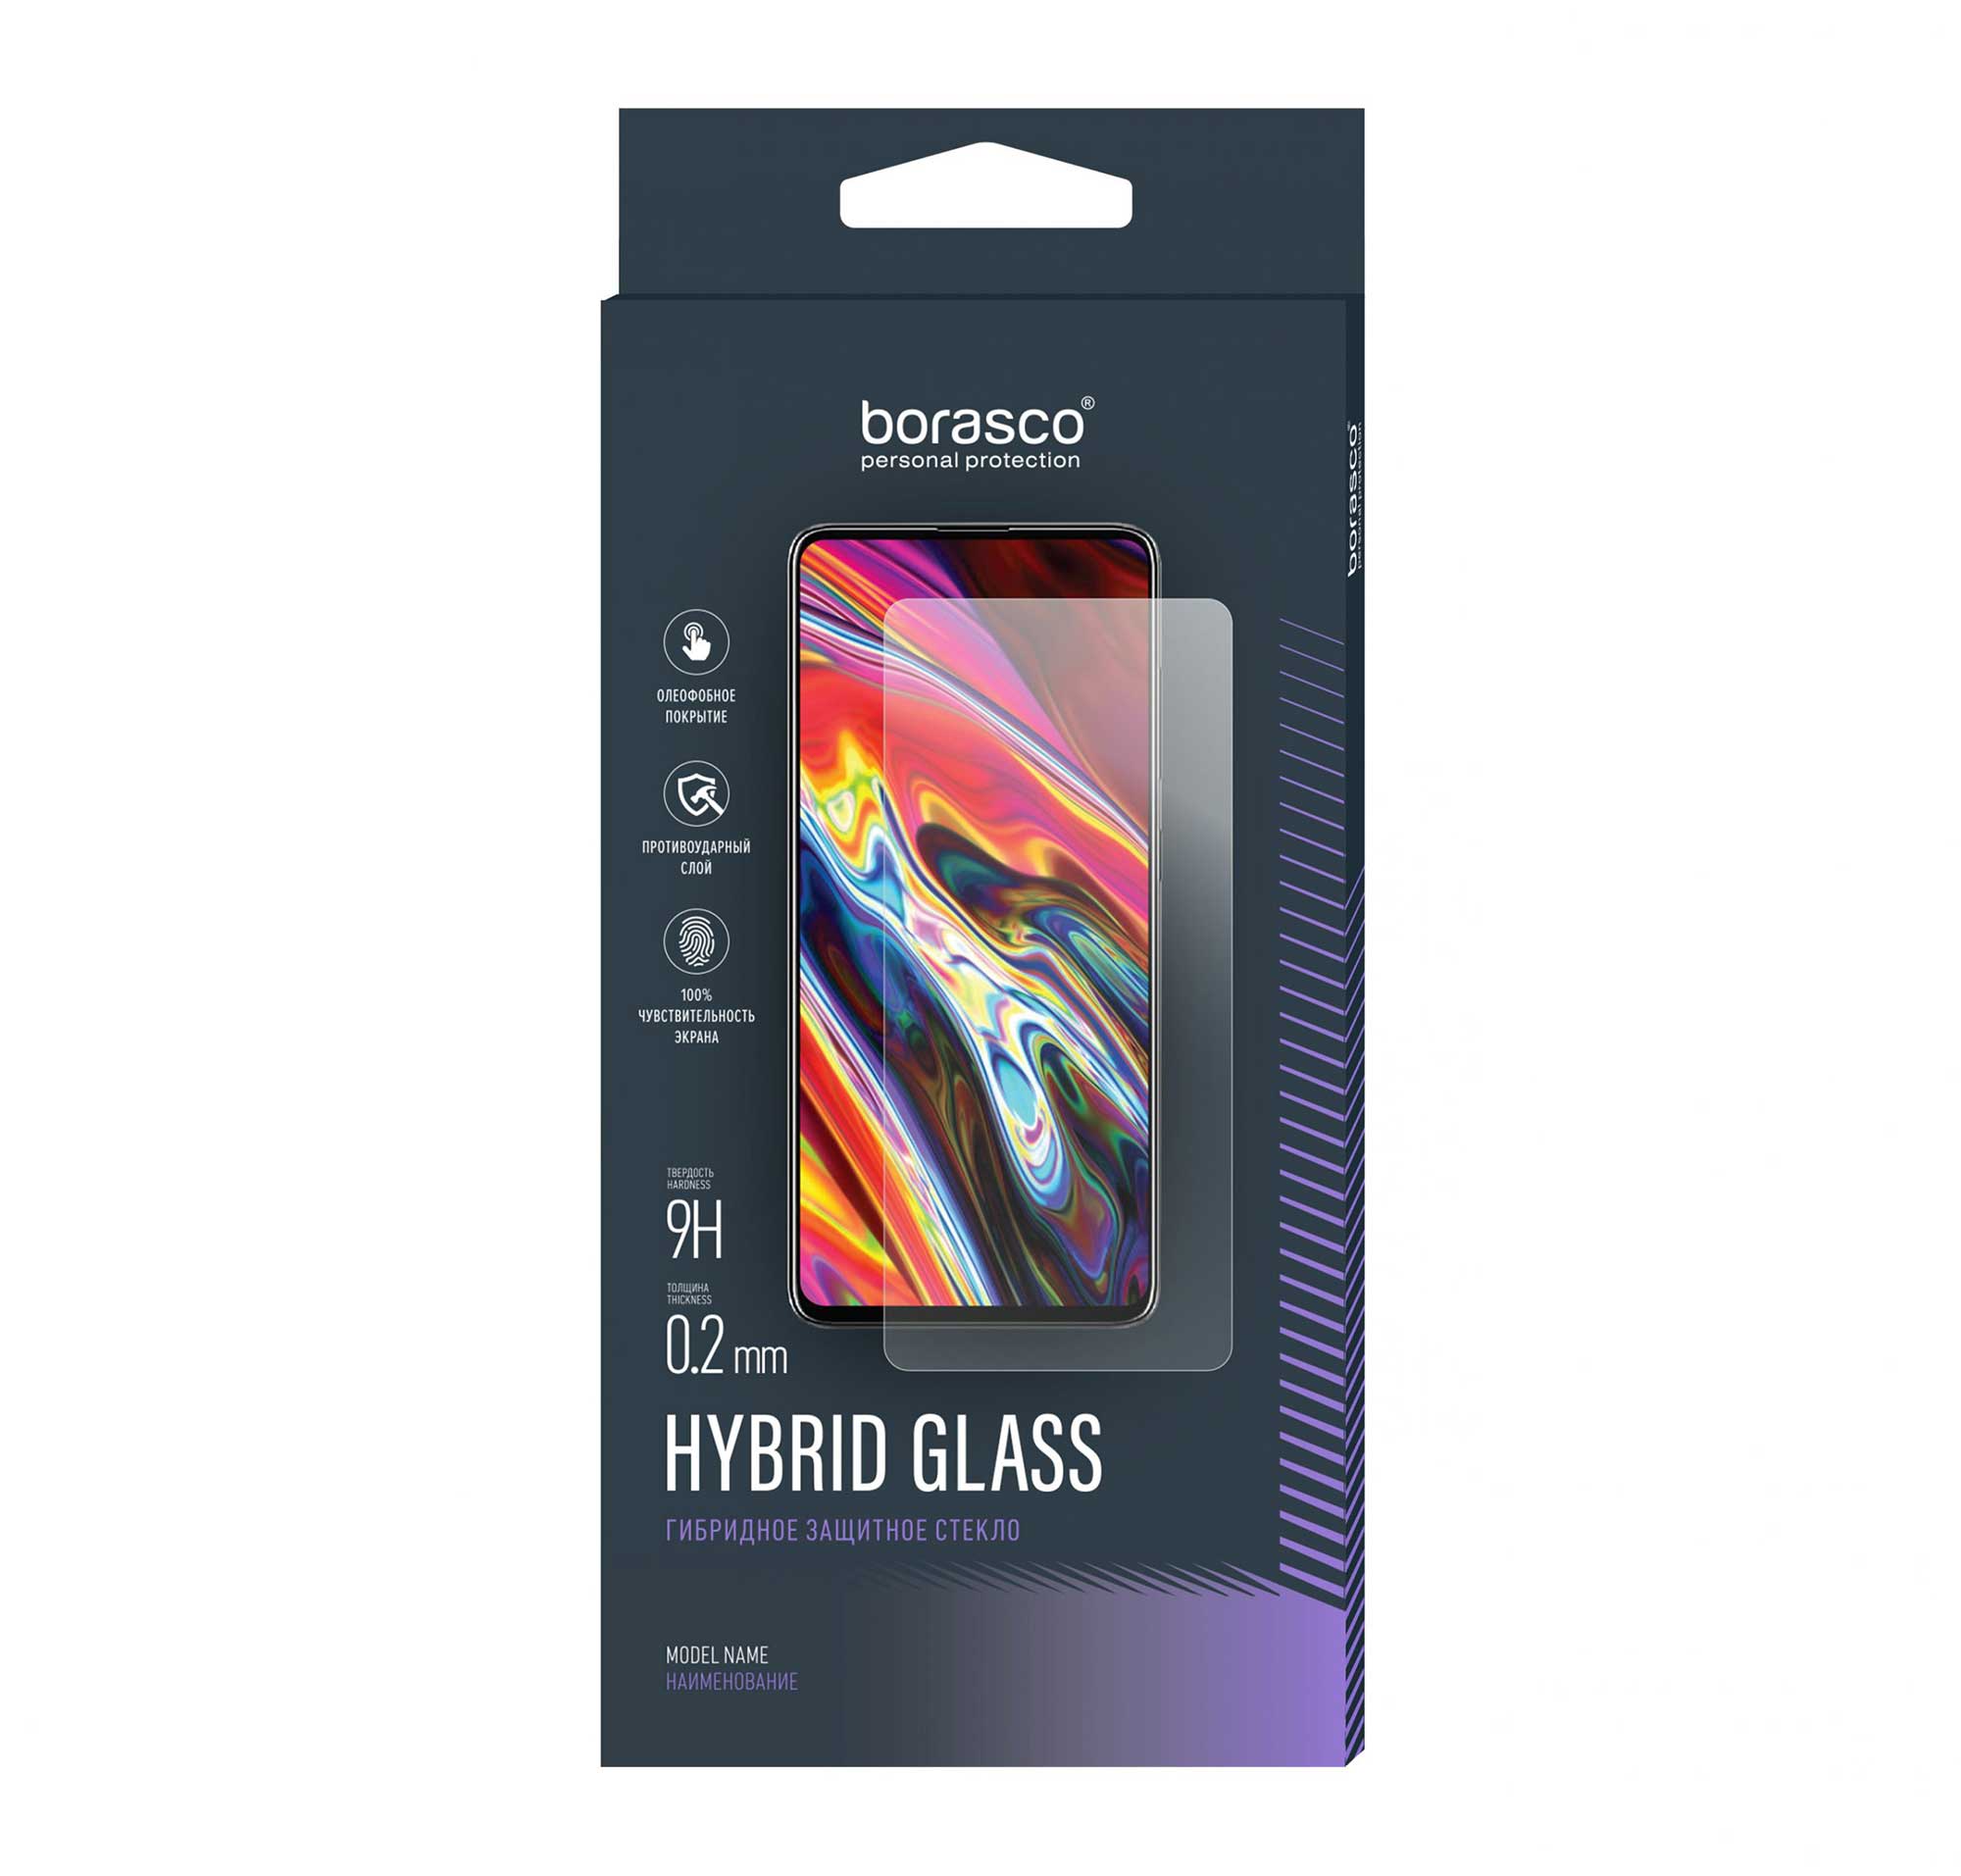 Защитное стекло BoraSCO Hybrid Glass для BQ 5528L Strike Forward szwesttop original 3200mah battery for bq bq 5512l strike forward cellphone batterie for bq 5512l smart phone